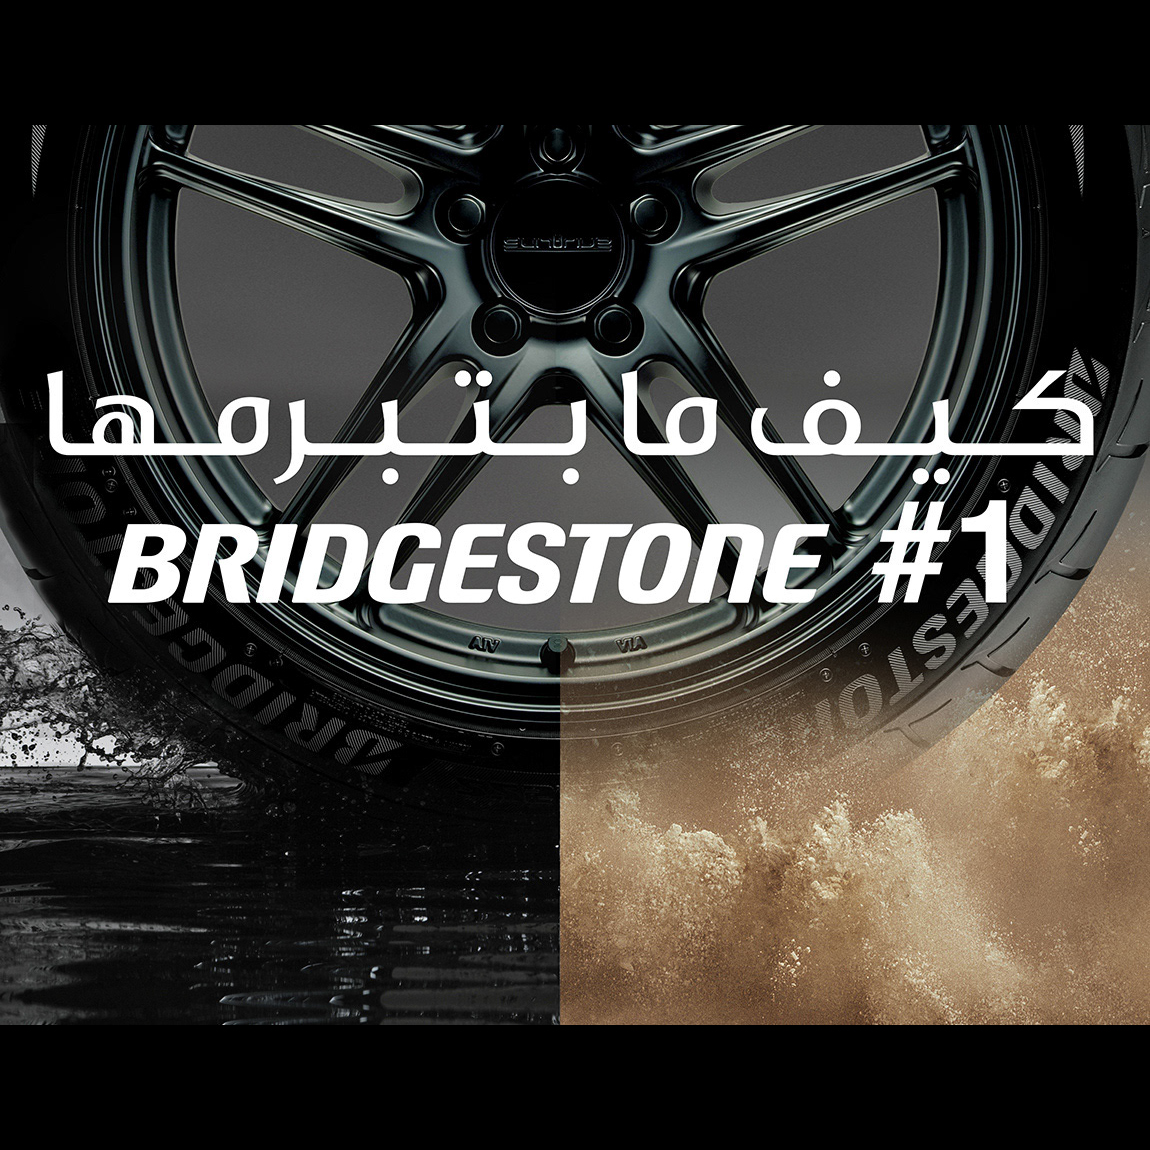 Bridgestone Campaign